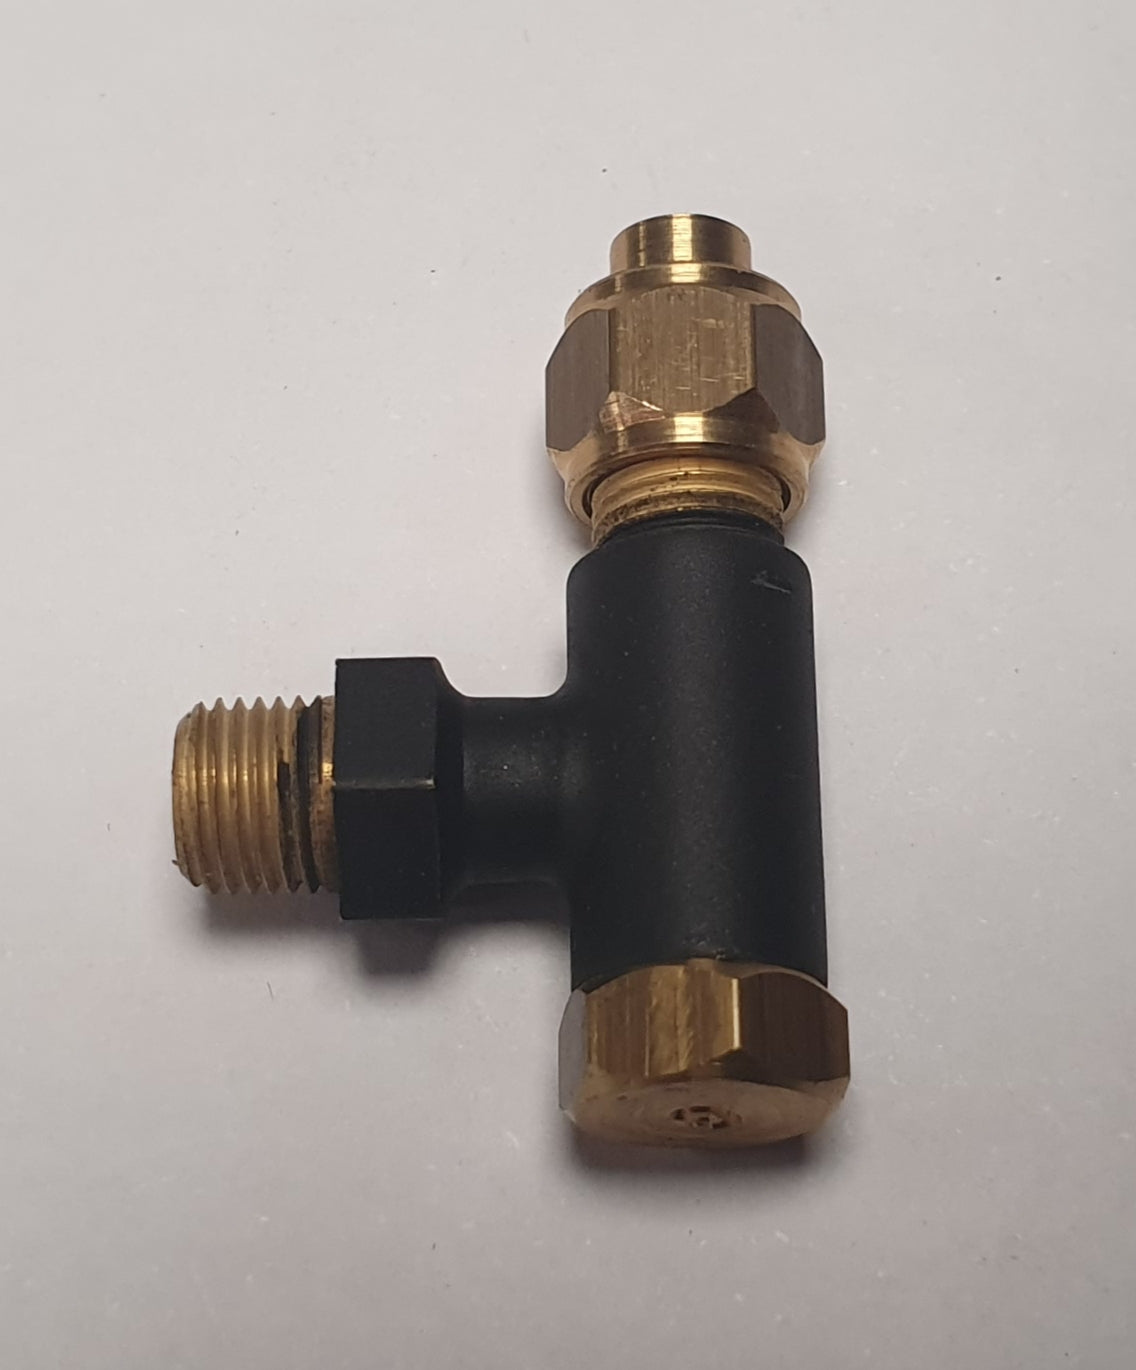 Tony Green Steam Fittings : 1/4" x 40 tpi oil check valve. G223A